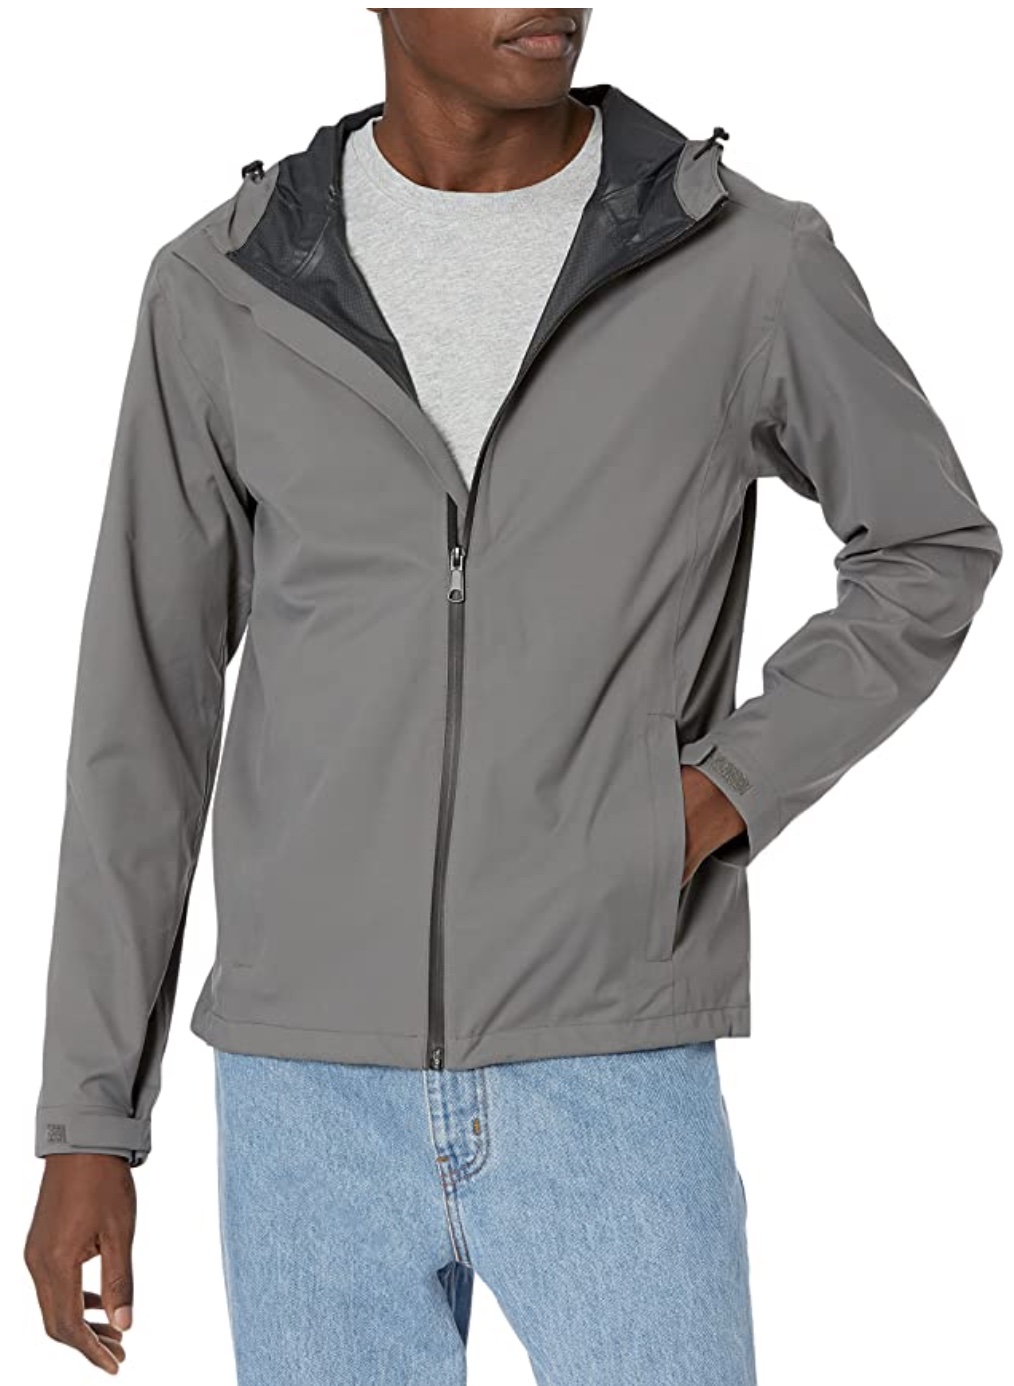 Amazon Basics rain jacket.